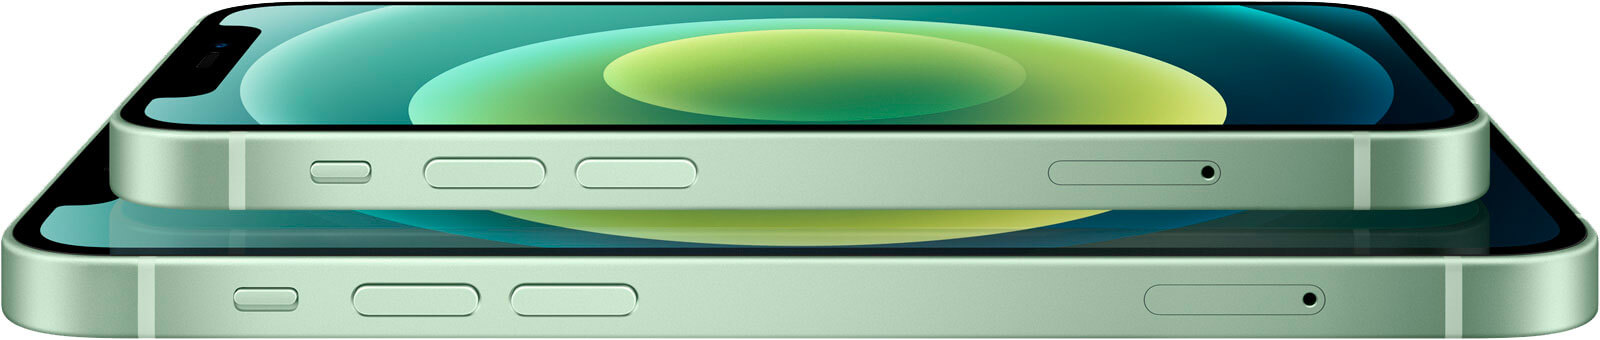 Nuevo iPhone 12 Verde Barato